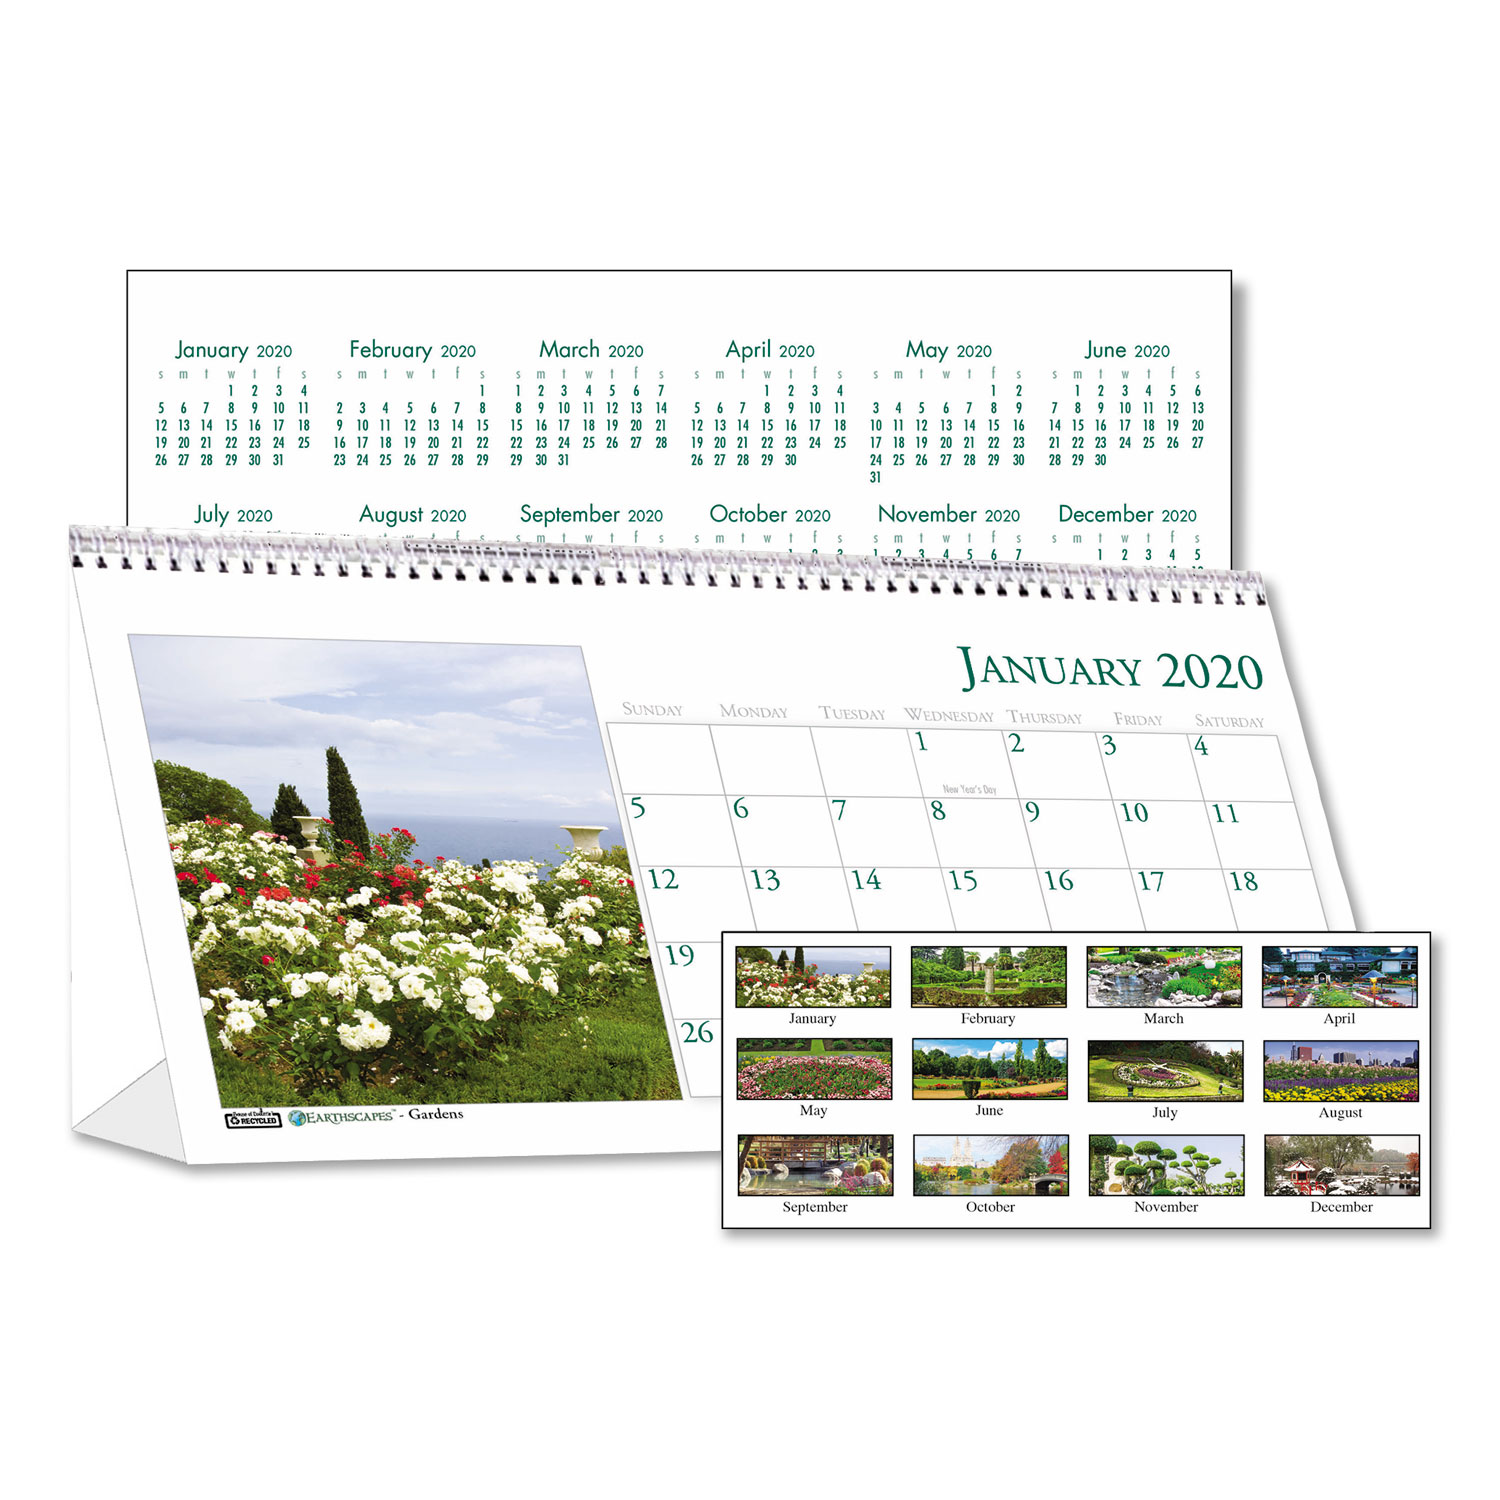  House of Doolittle 309 Recycled Garden Photos Desk Tent Monthly Calendar, 8 1/2 x 4 1/2, 2020 (HOD309) 